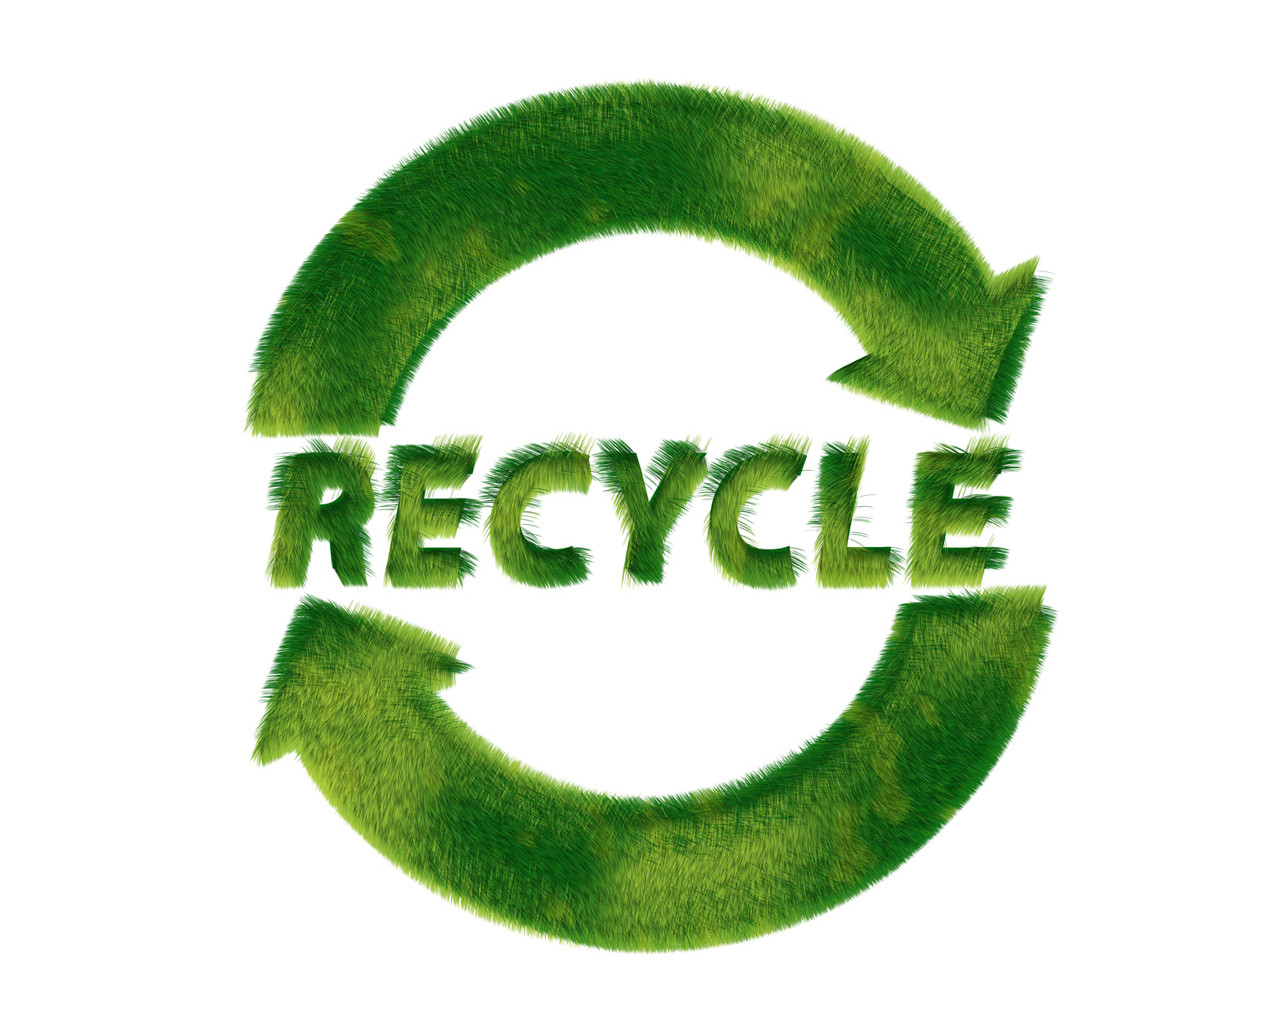 Greenpeace Symbols - Recycle symbols and Green icons 1280x1024 NO ...